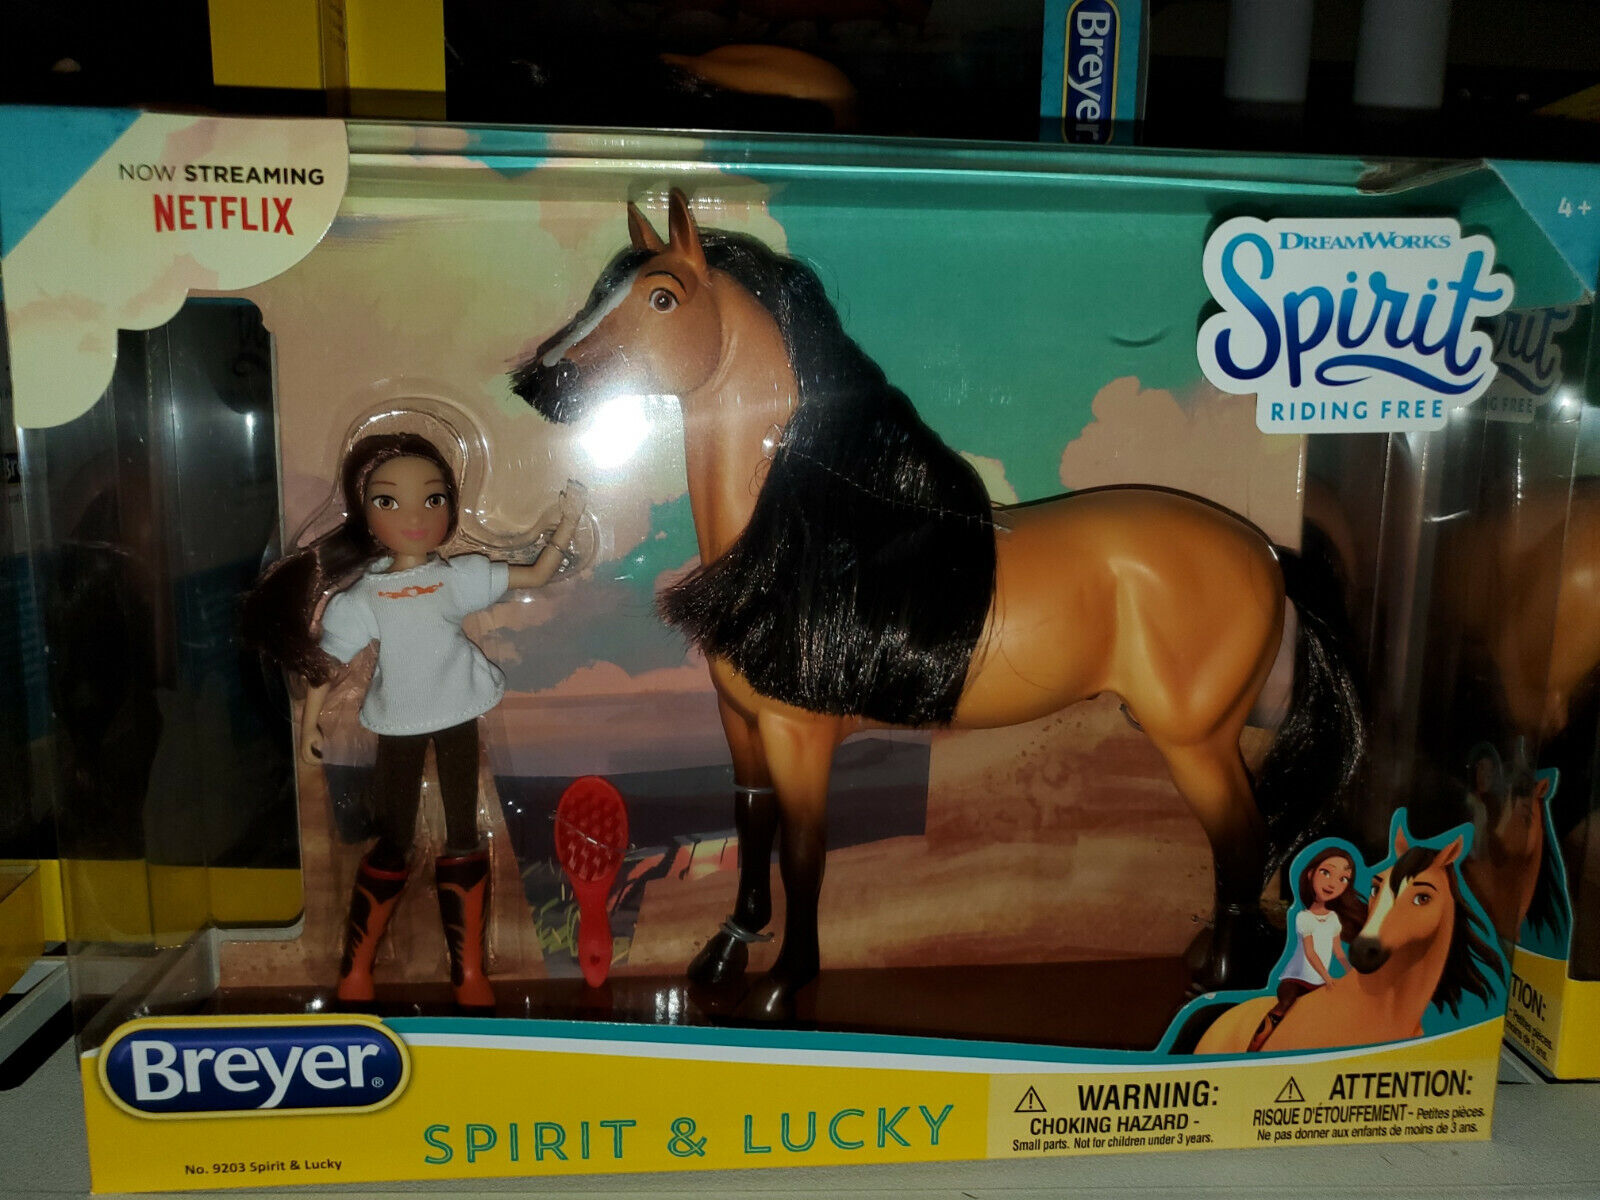 BREYER HORSE- DREAMWORKS SPIRIT RIDING FREE - #9203 -NIB -SPIRIT & LUCKY DOLL 